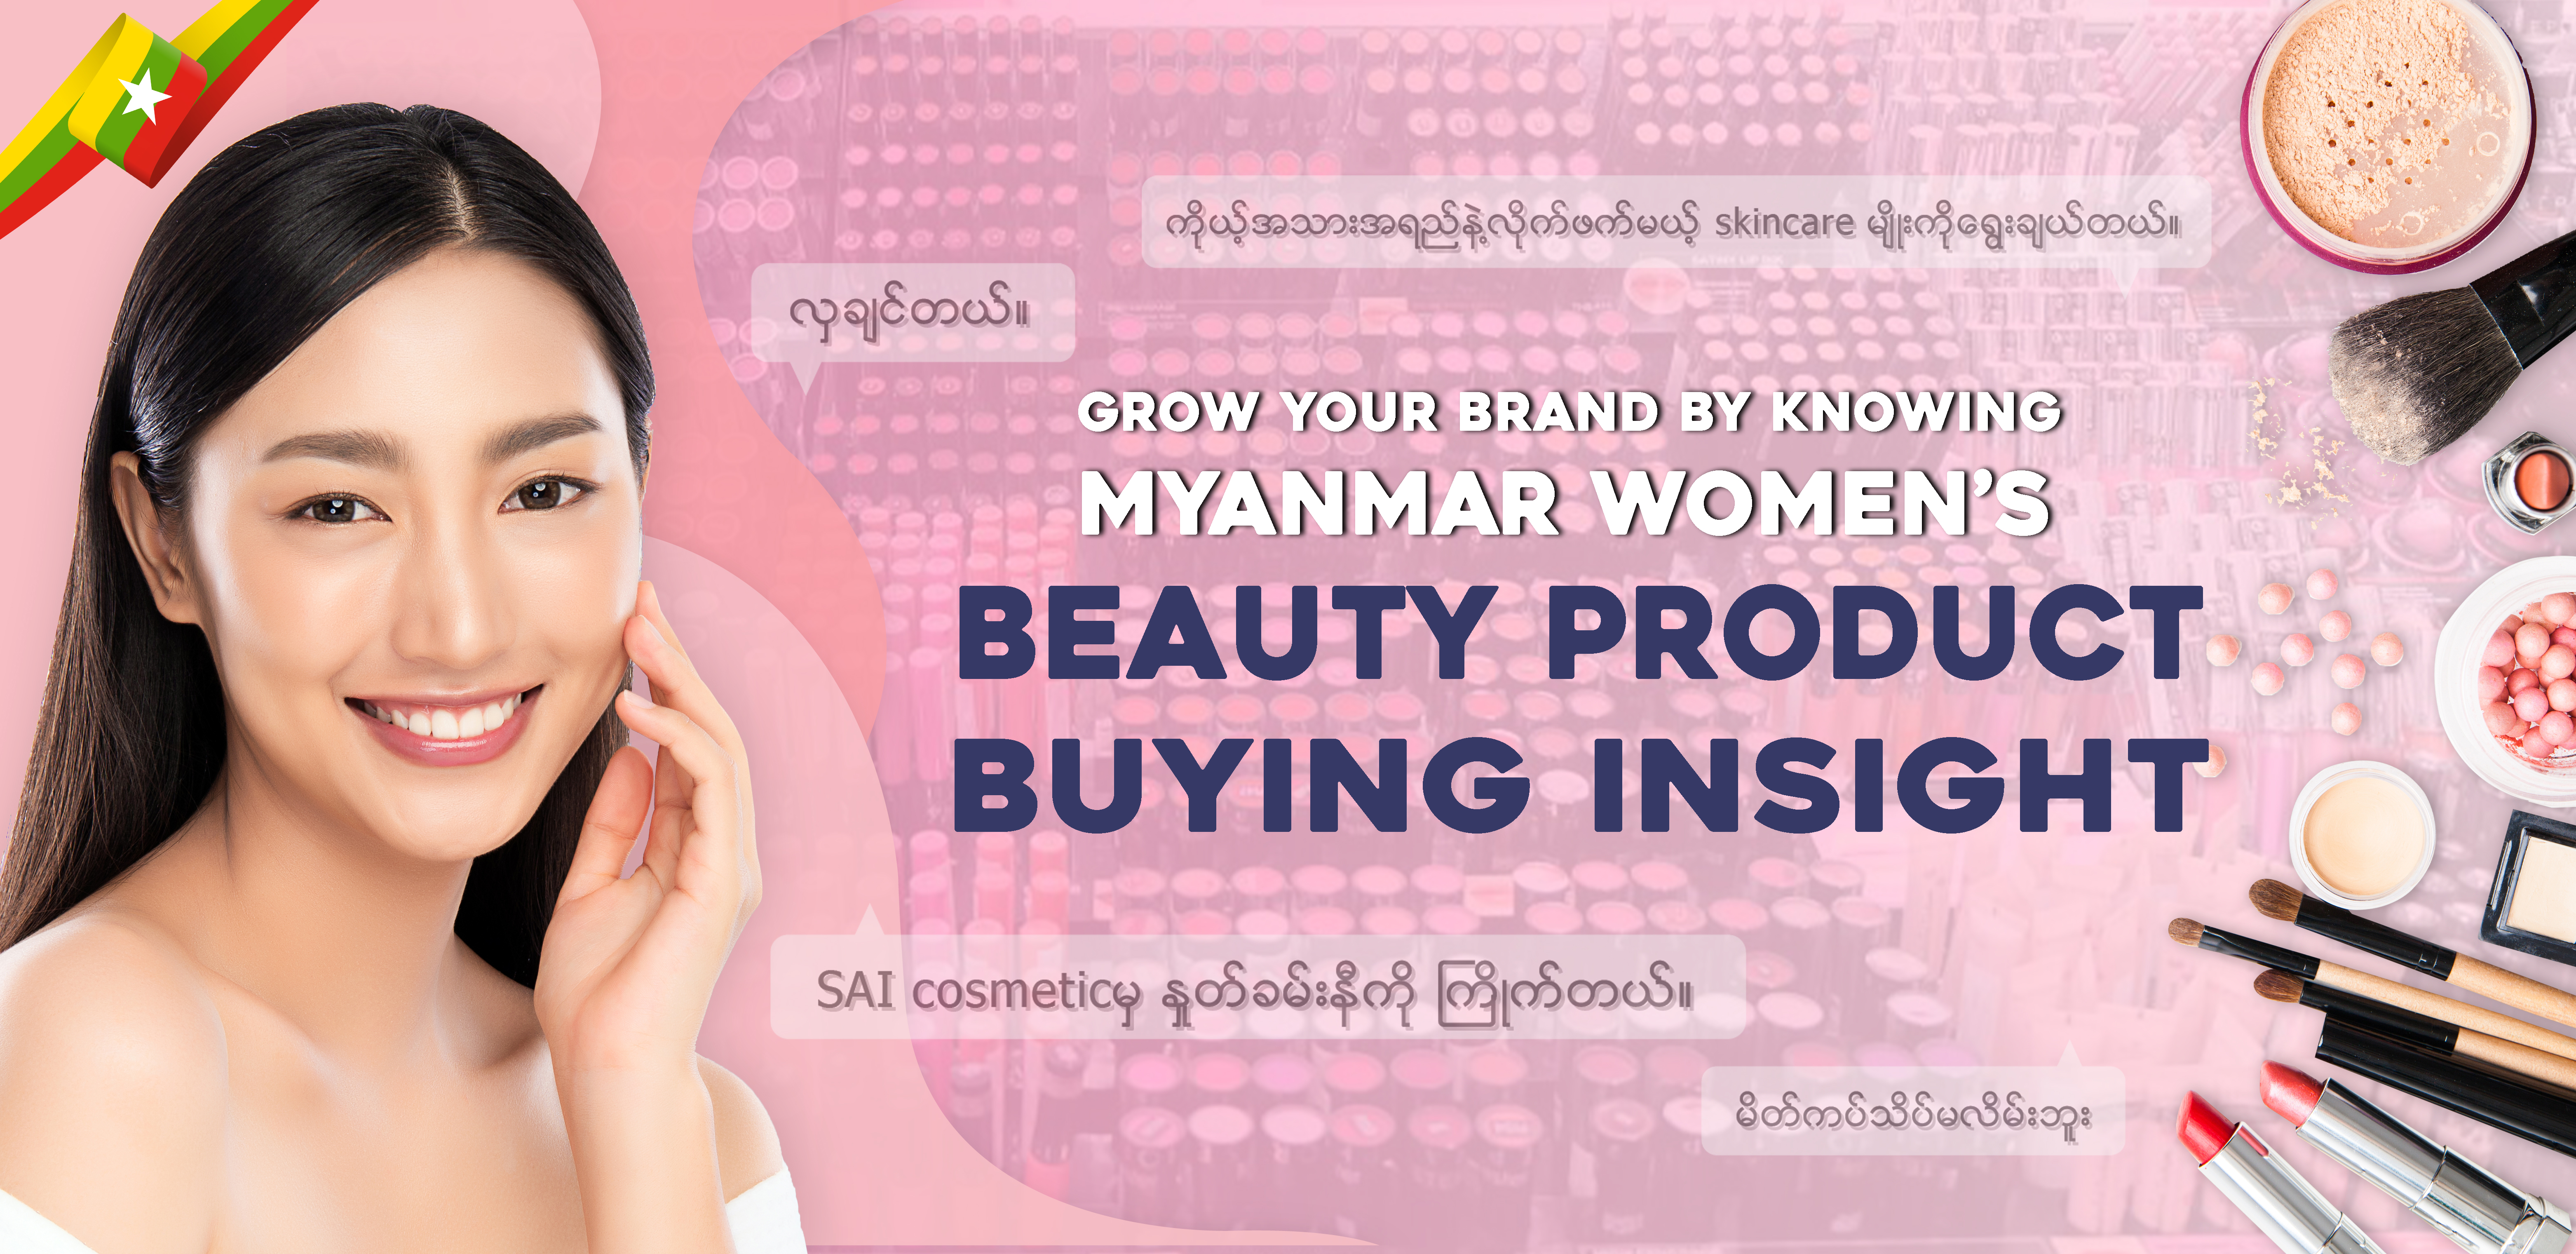 The B.A.Beauty Market